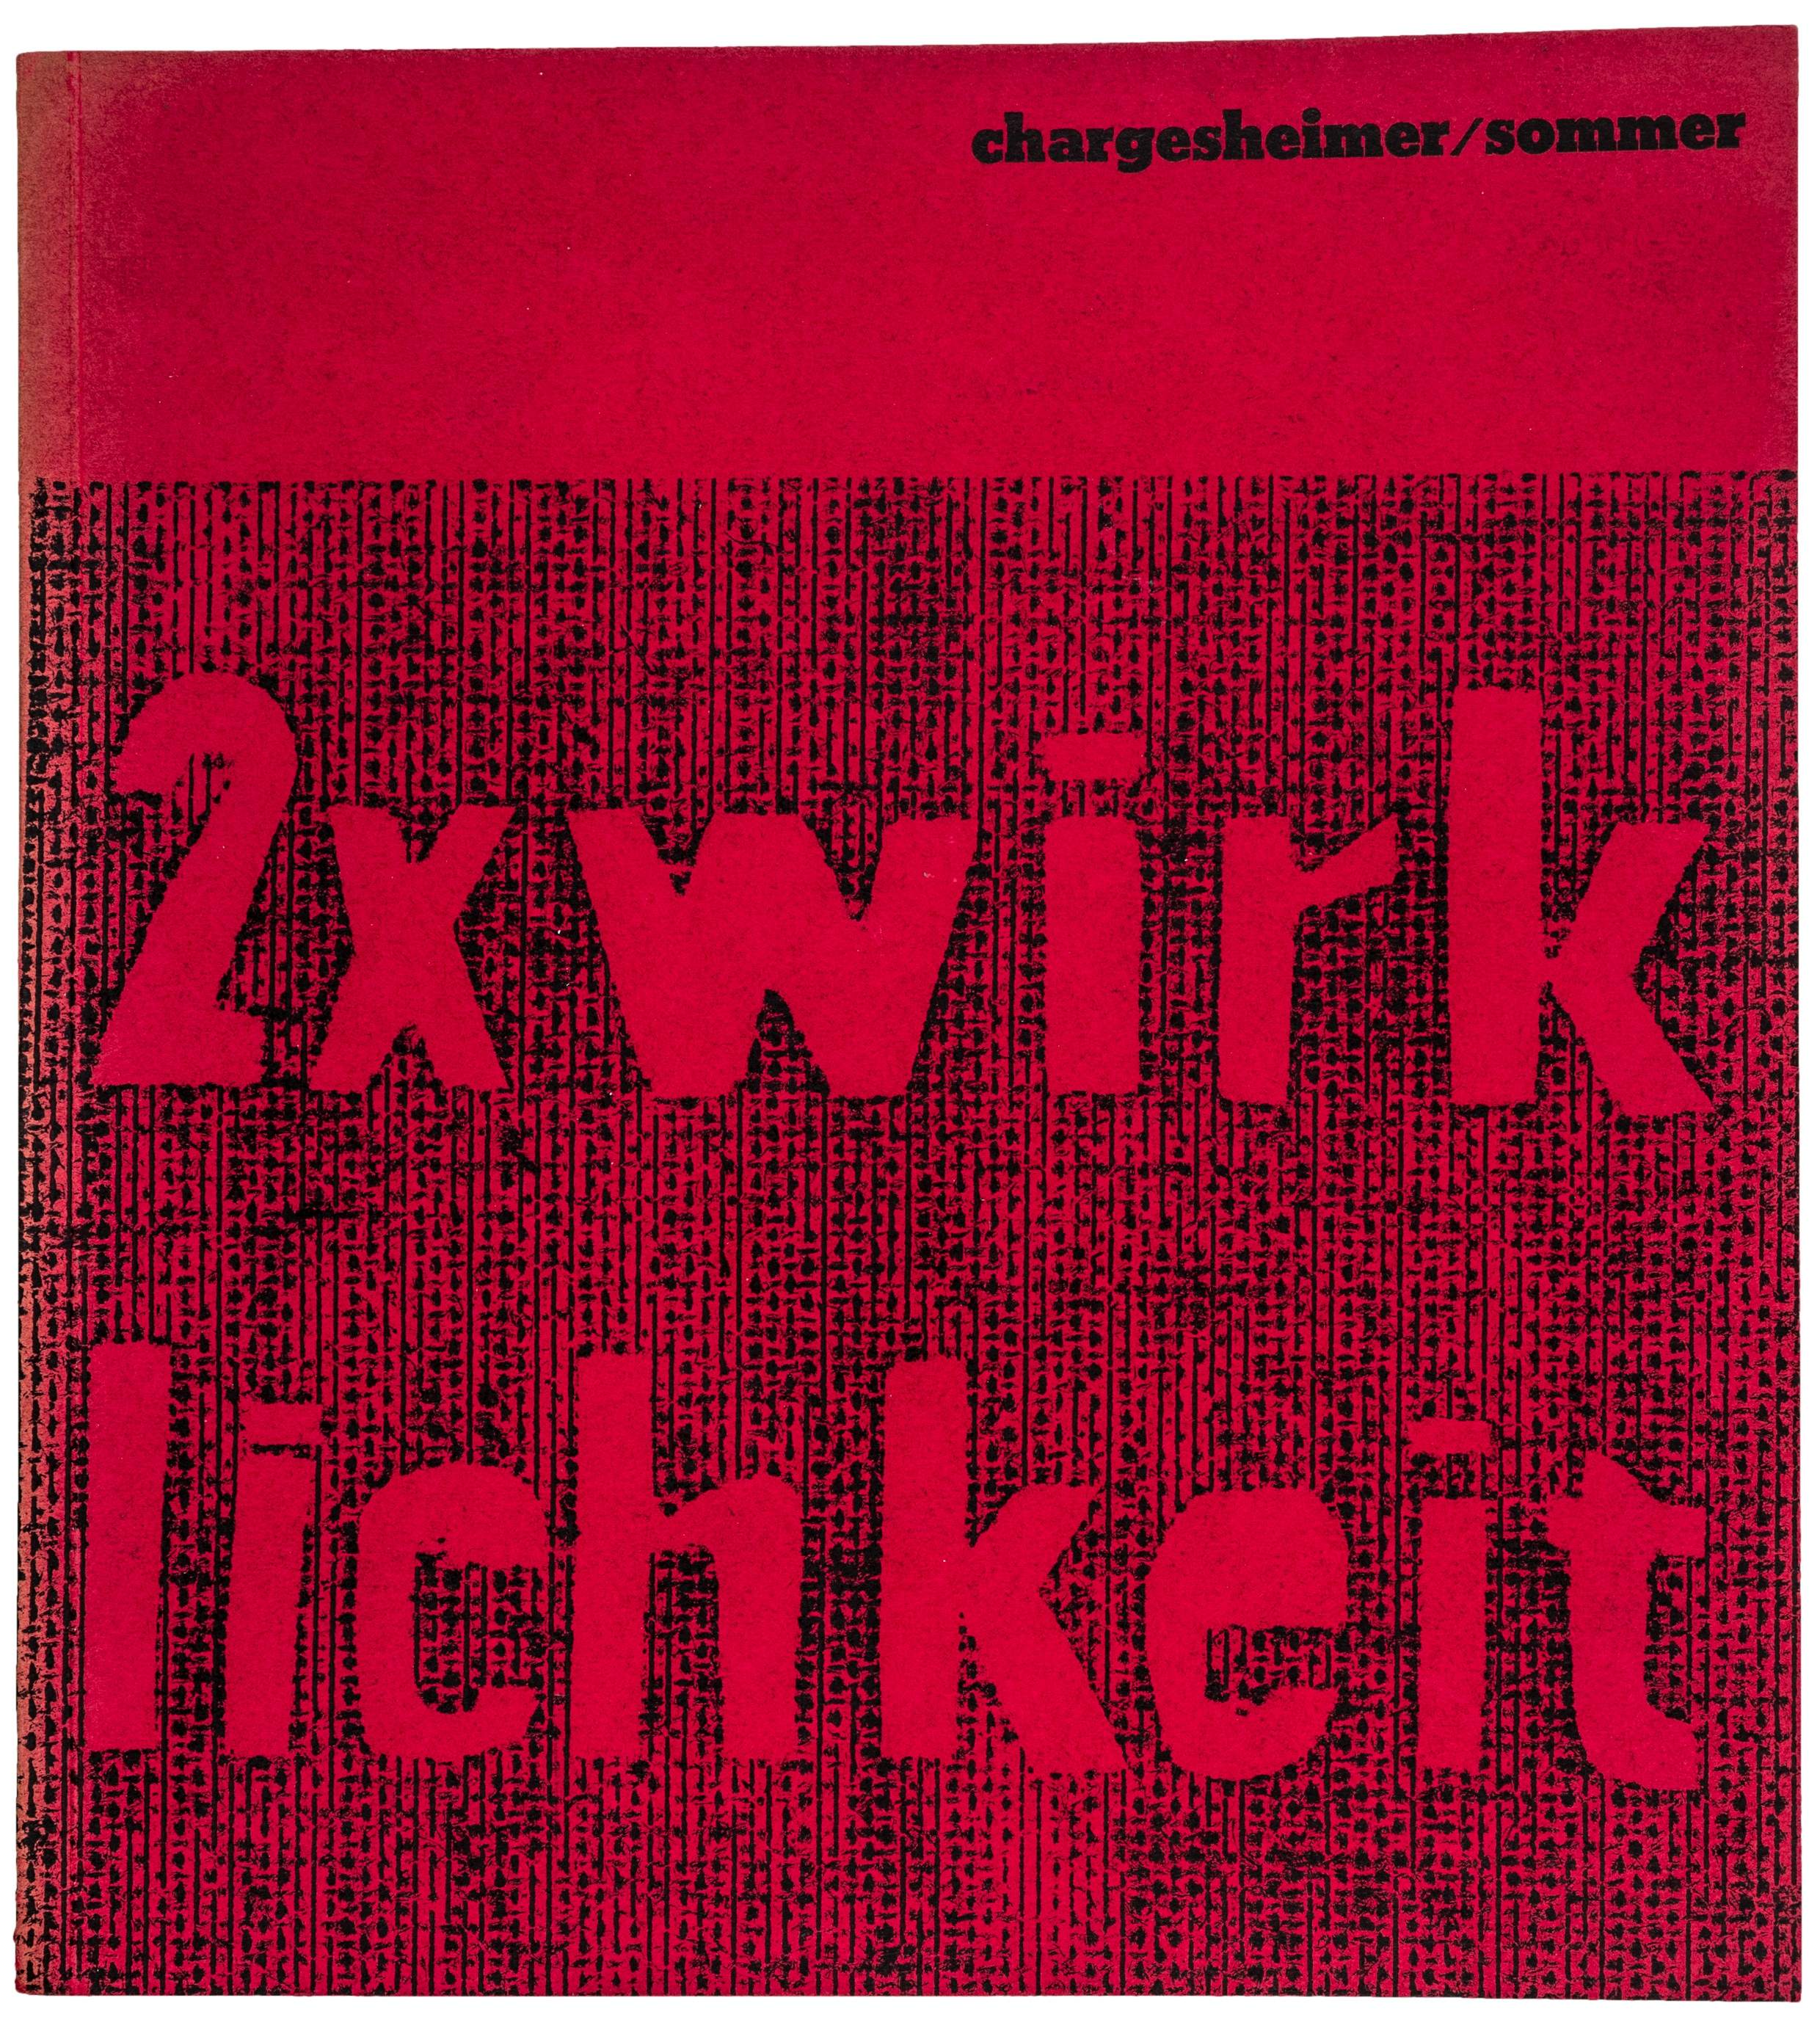 Chargesheimer (das ist: K. H. - Image 3 of 3